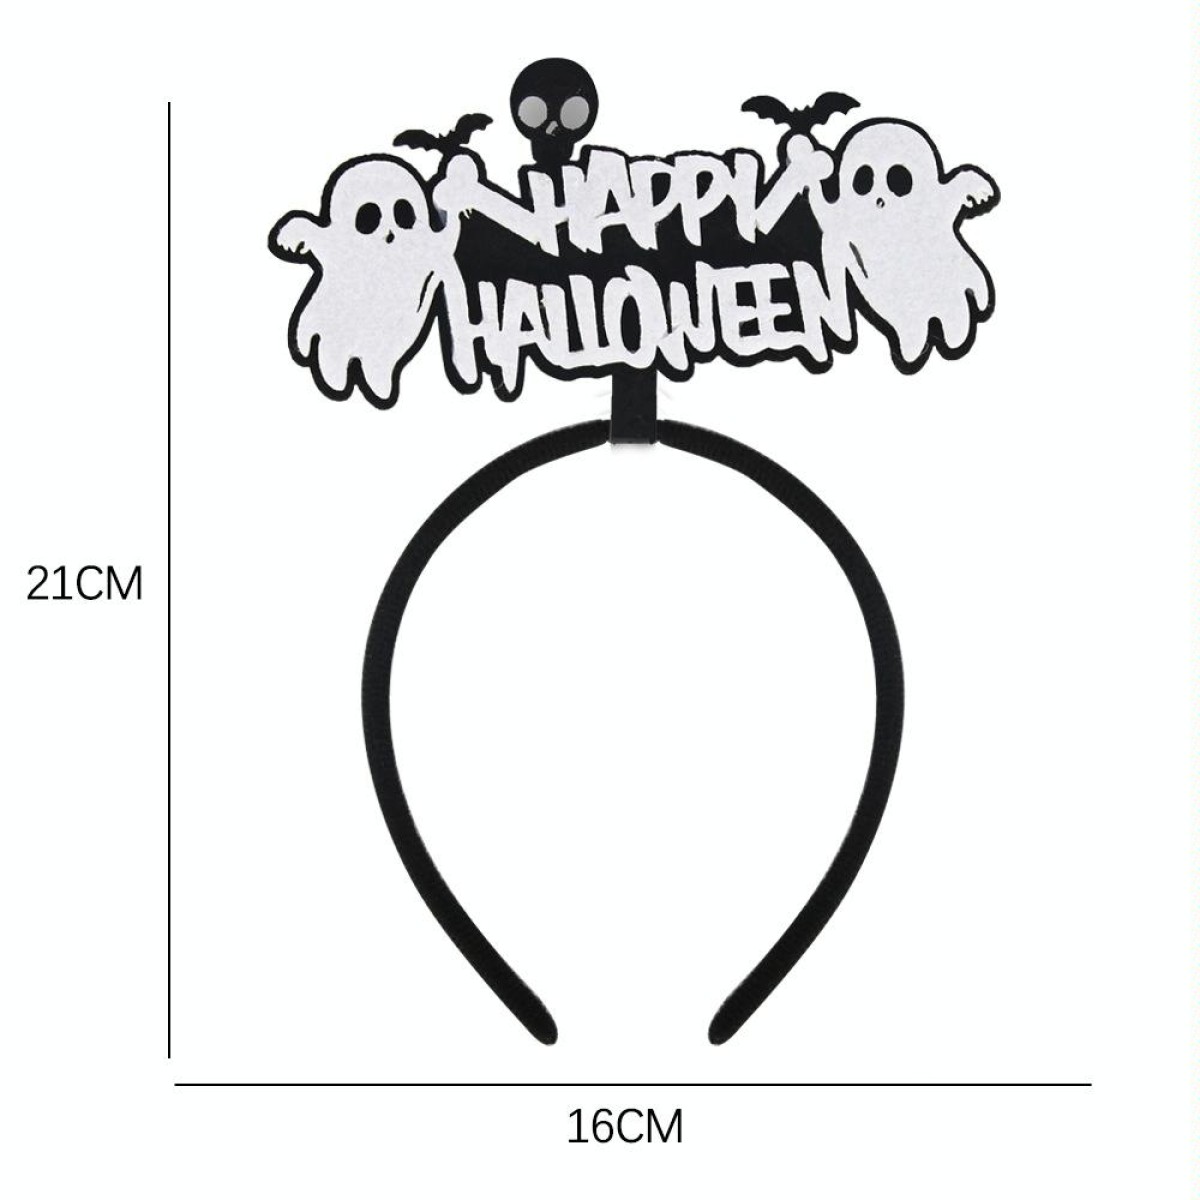 Halloween Felt Headband Children Party Decoration Props, Free Size(AA Model)